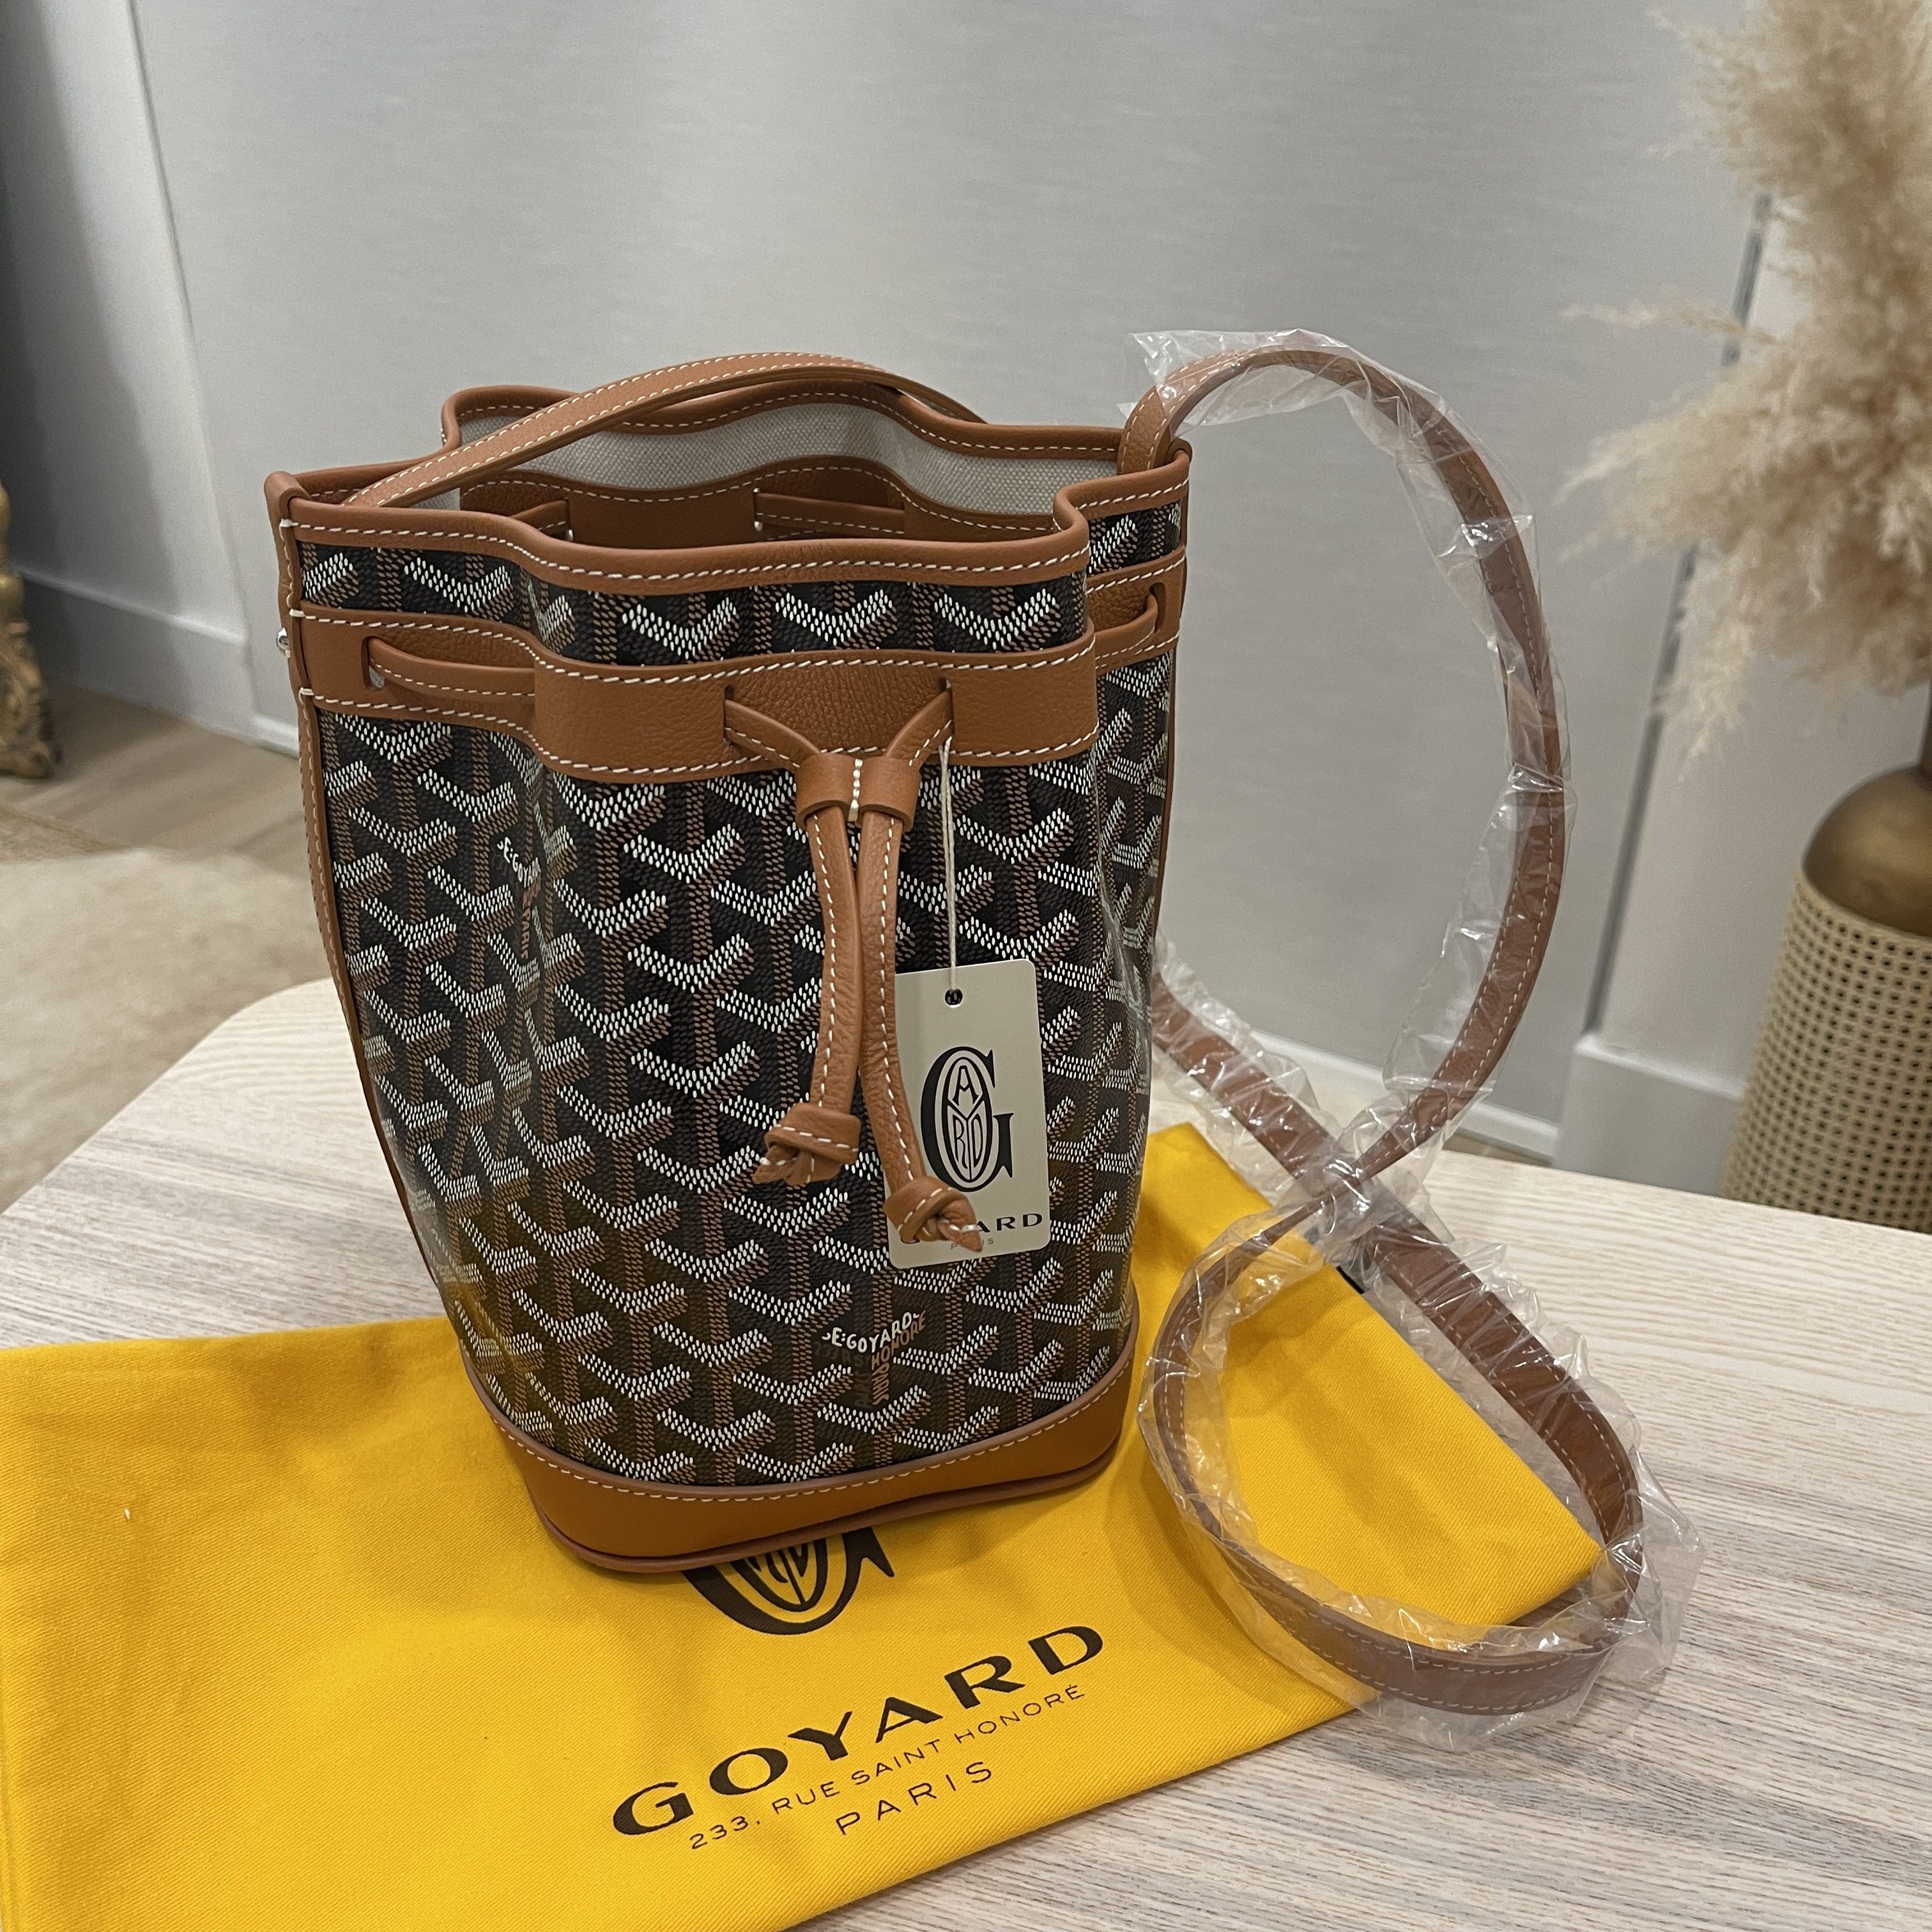 GOYARD-Goyard Petit Flot Bucket Bag PM Black and Tan